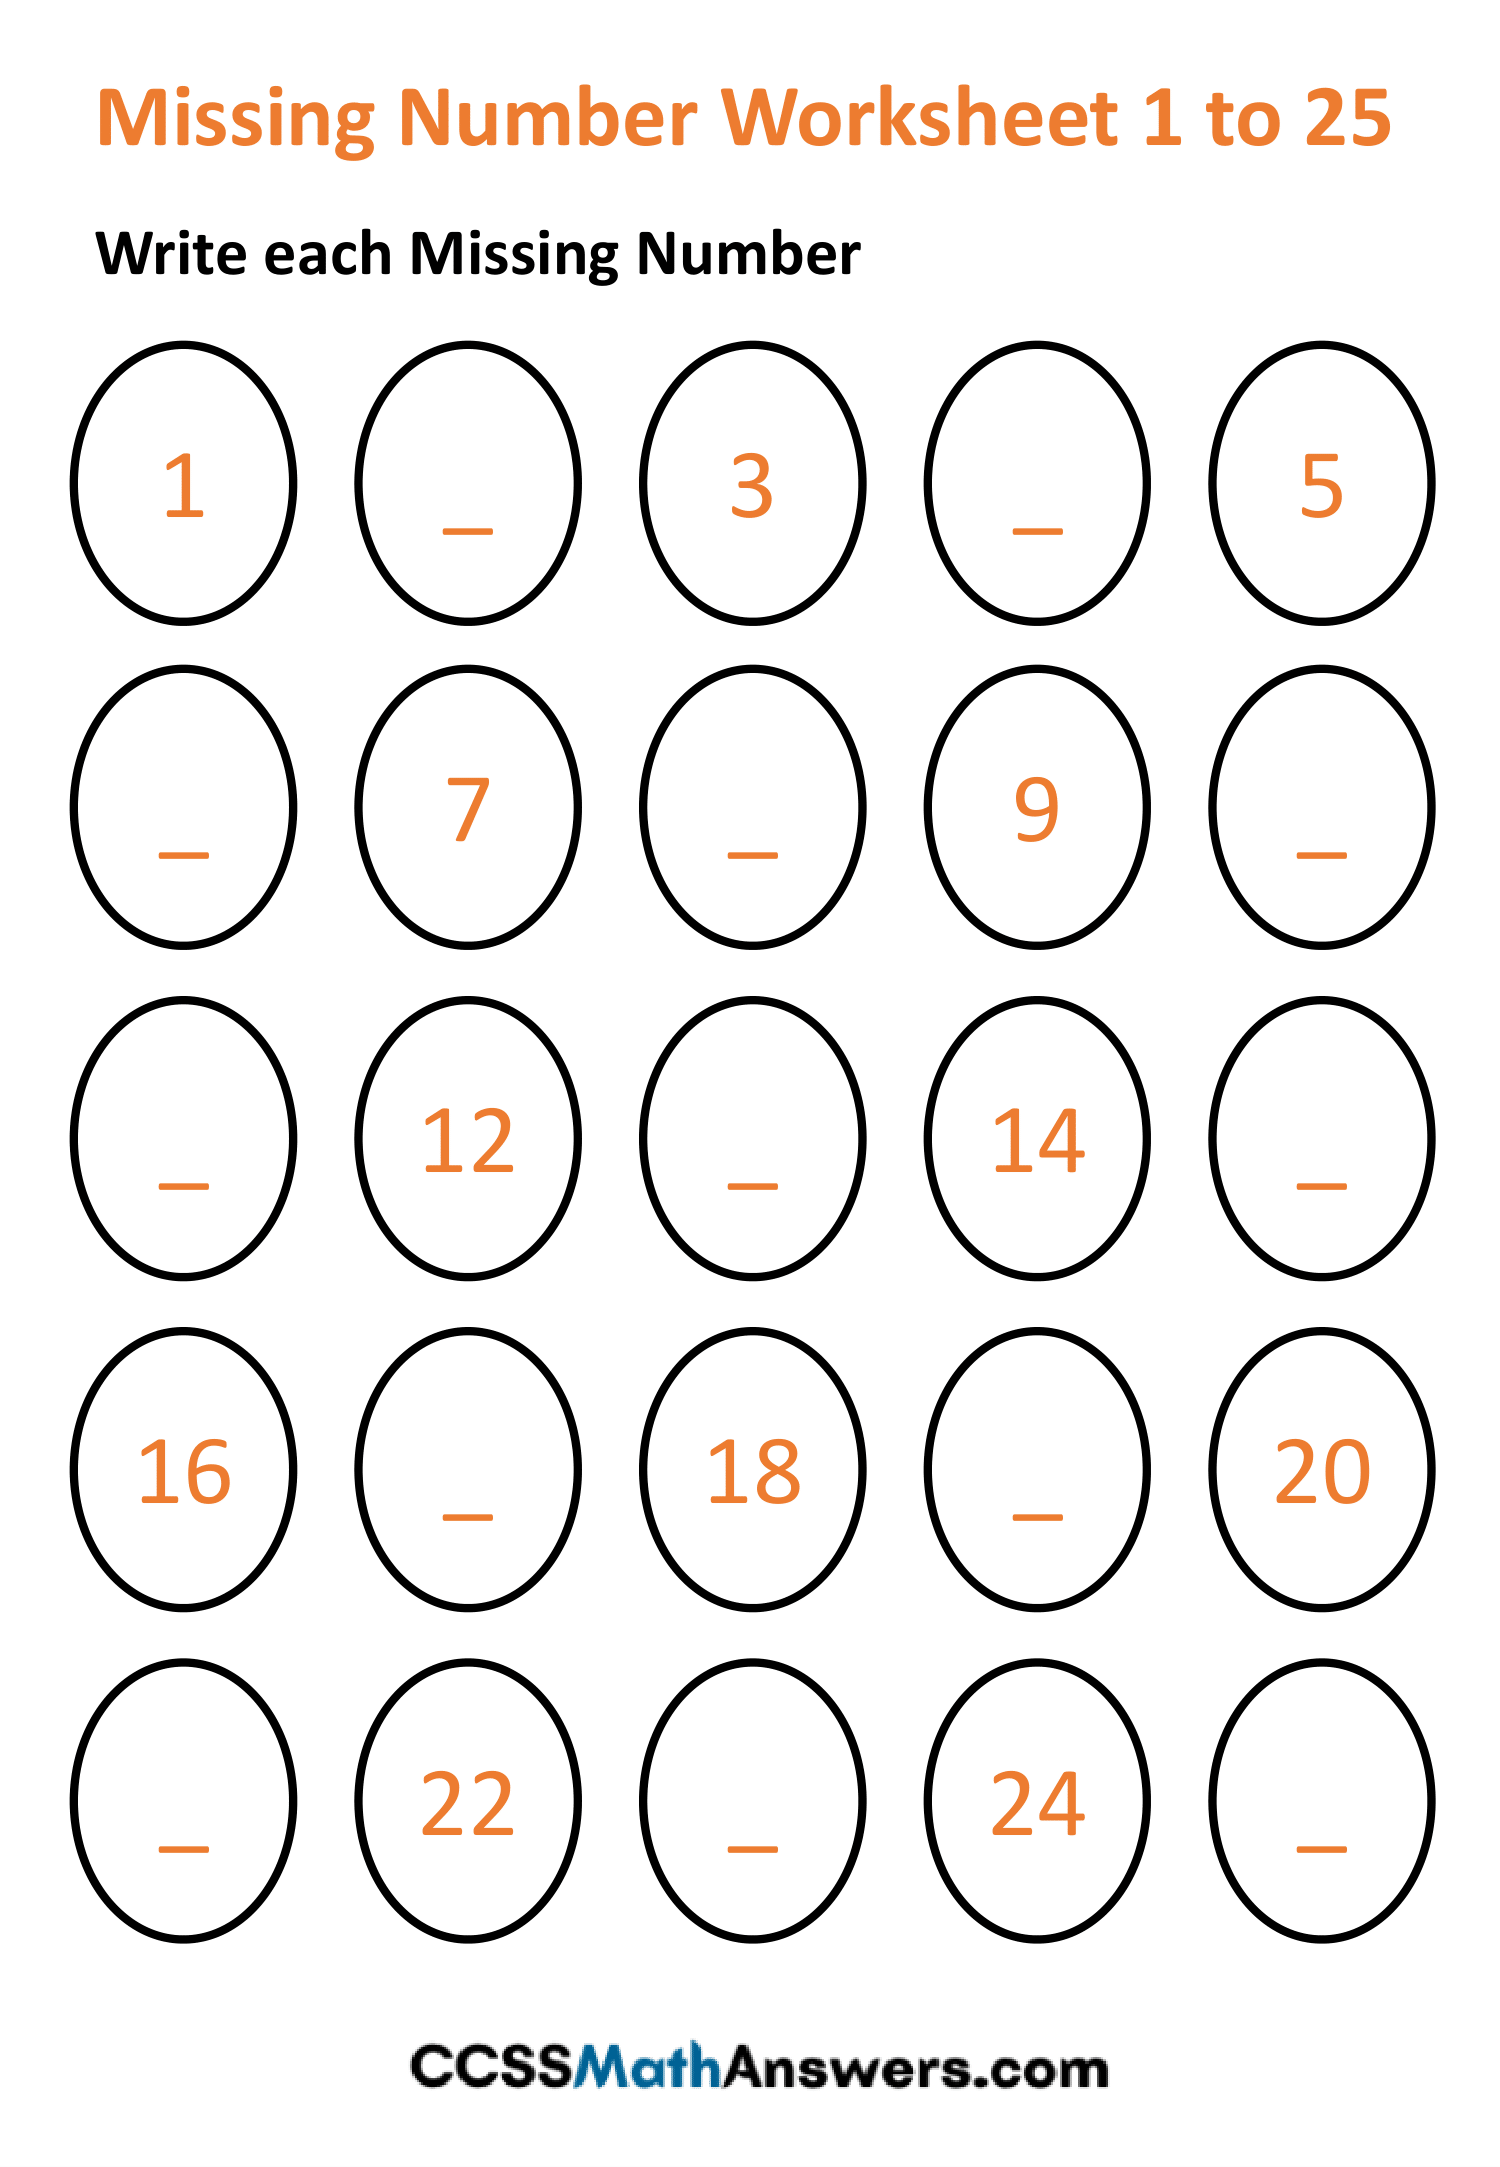 Missing Number Worksheets 1 to 25